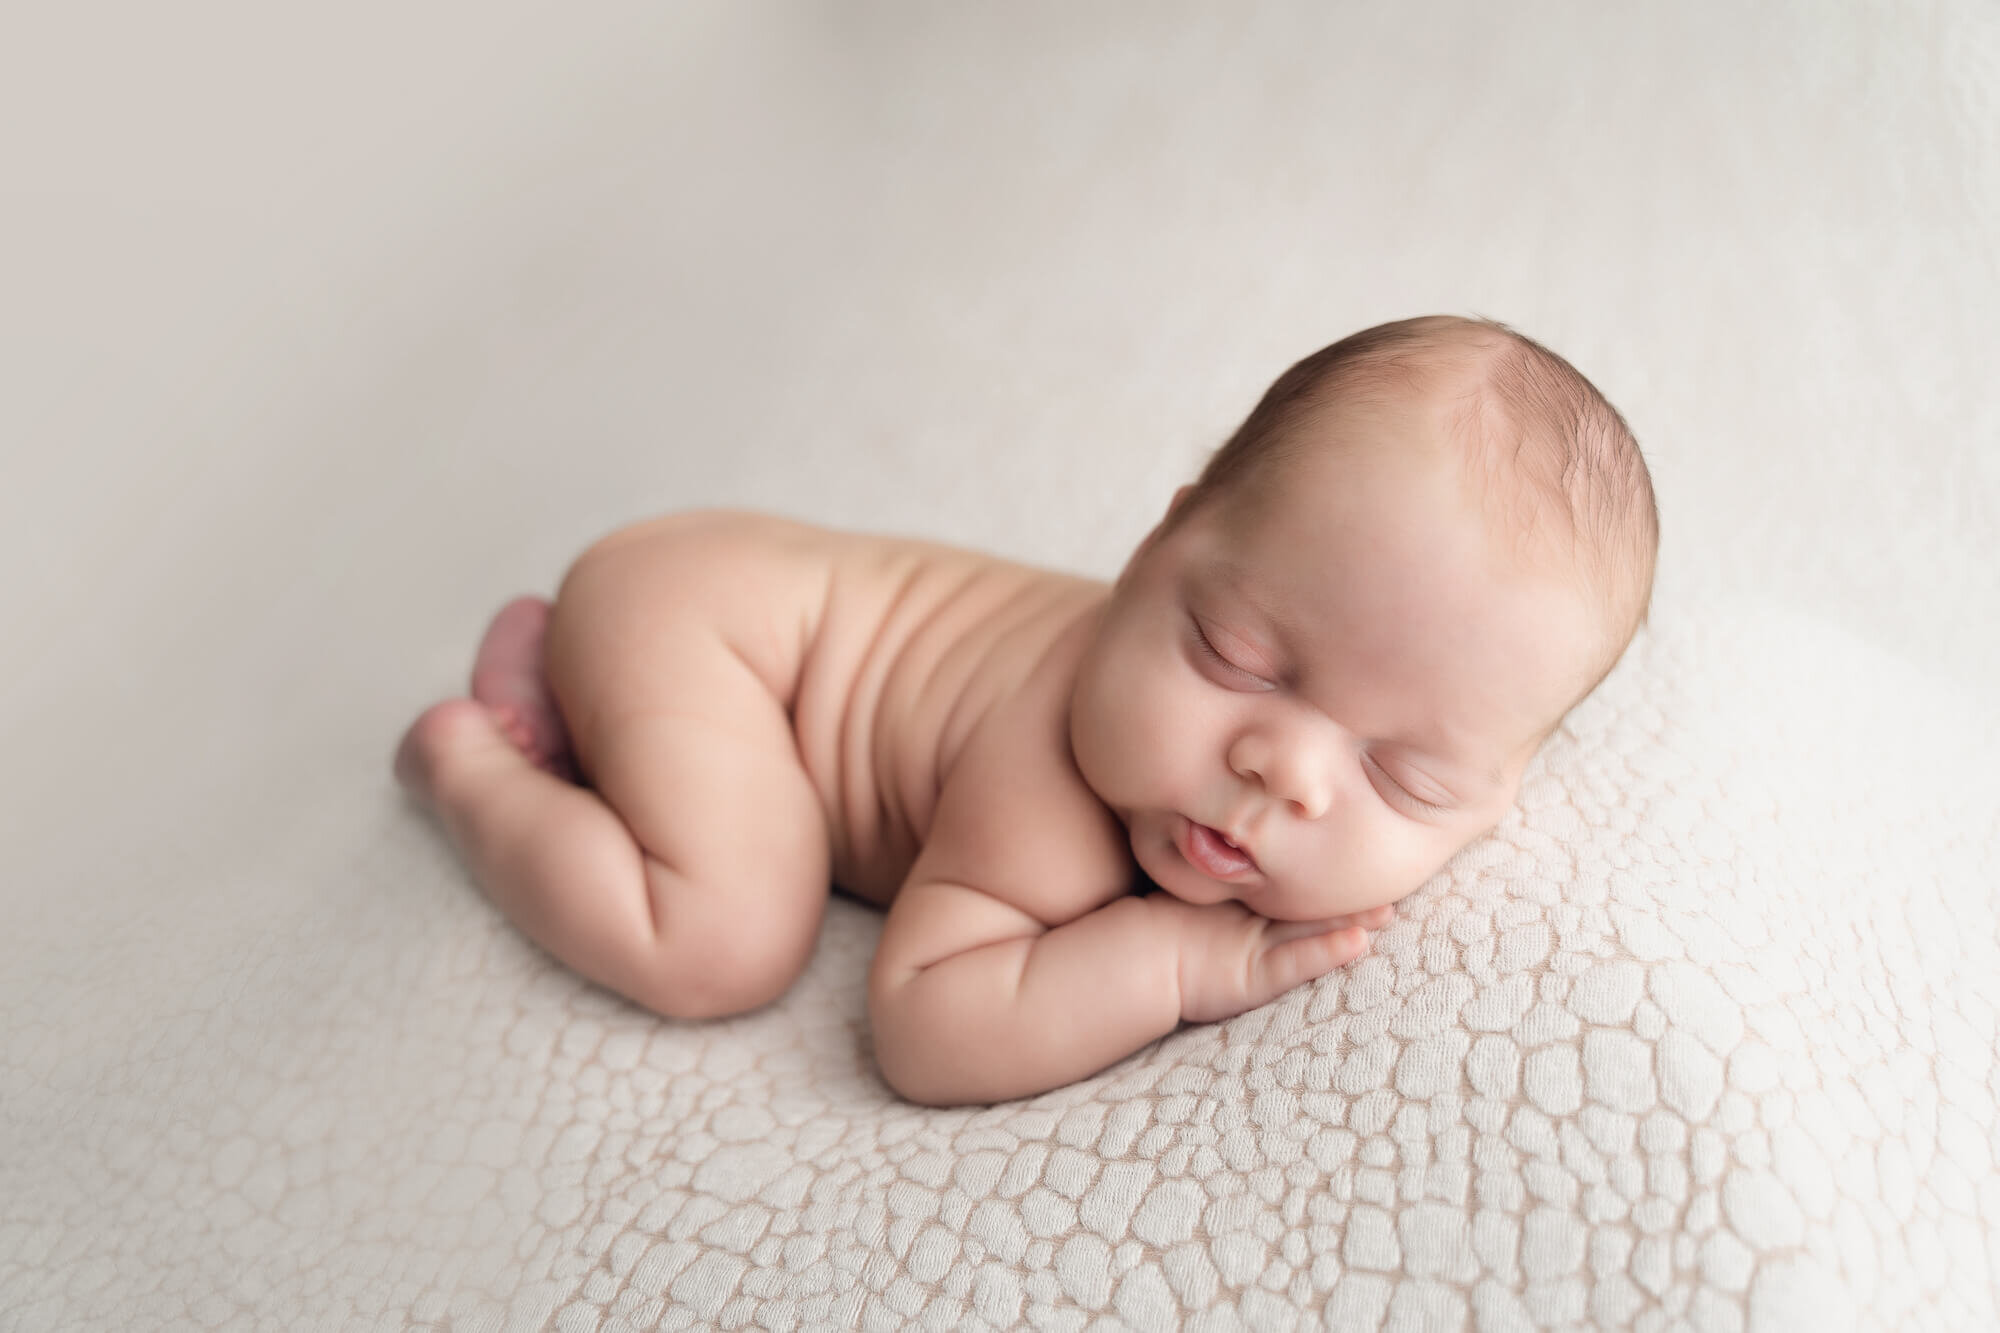 best knoxville newborn photographer 09617 copy.jpg